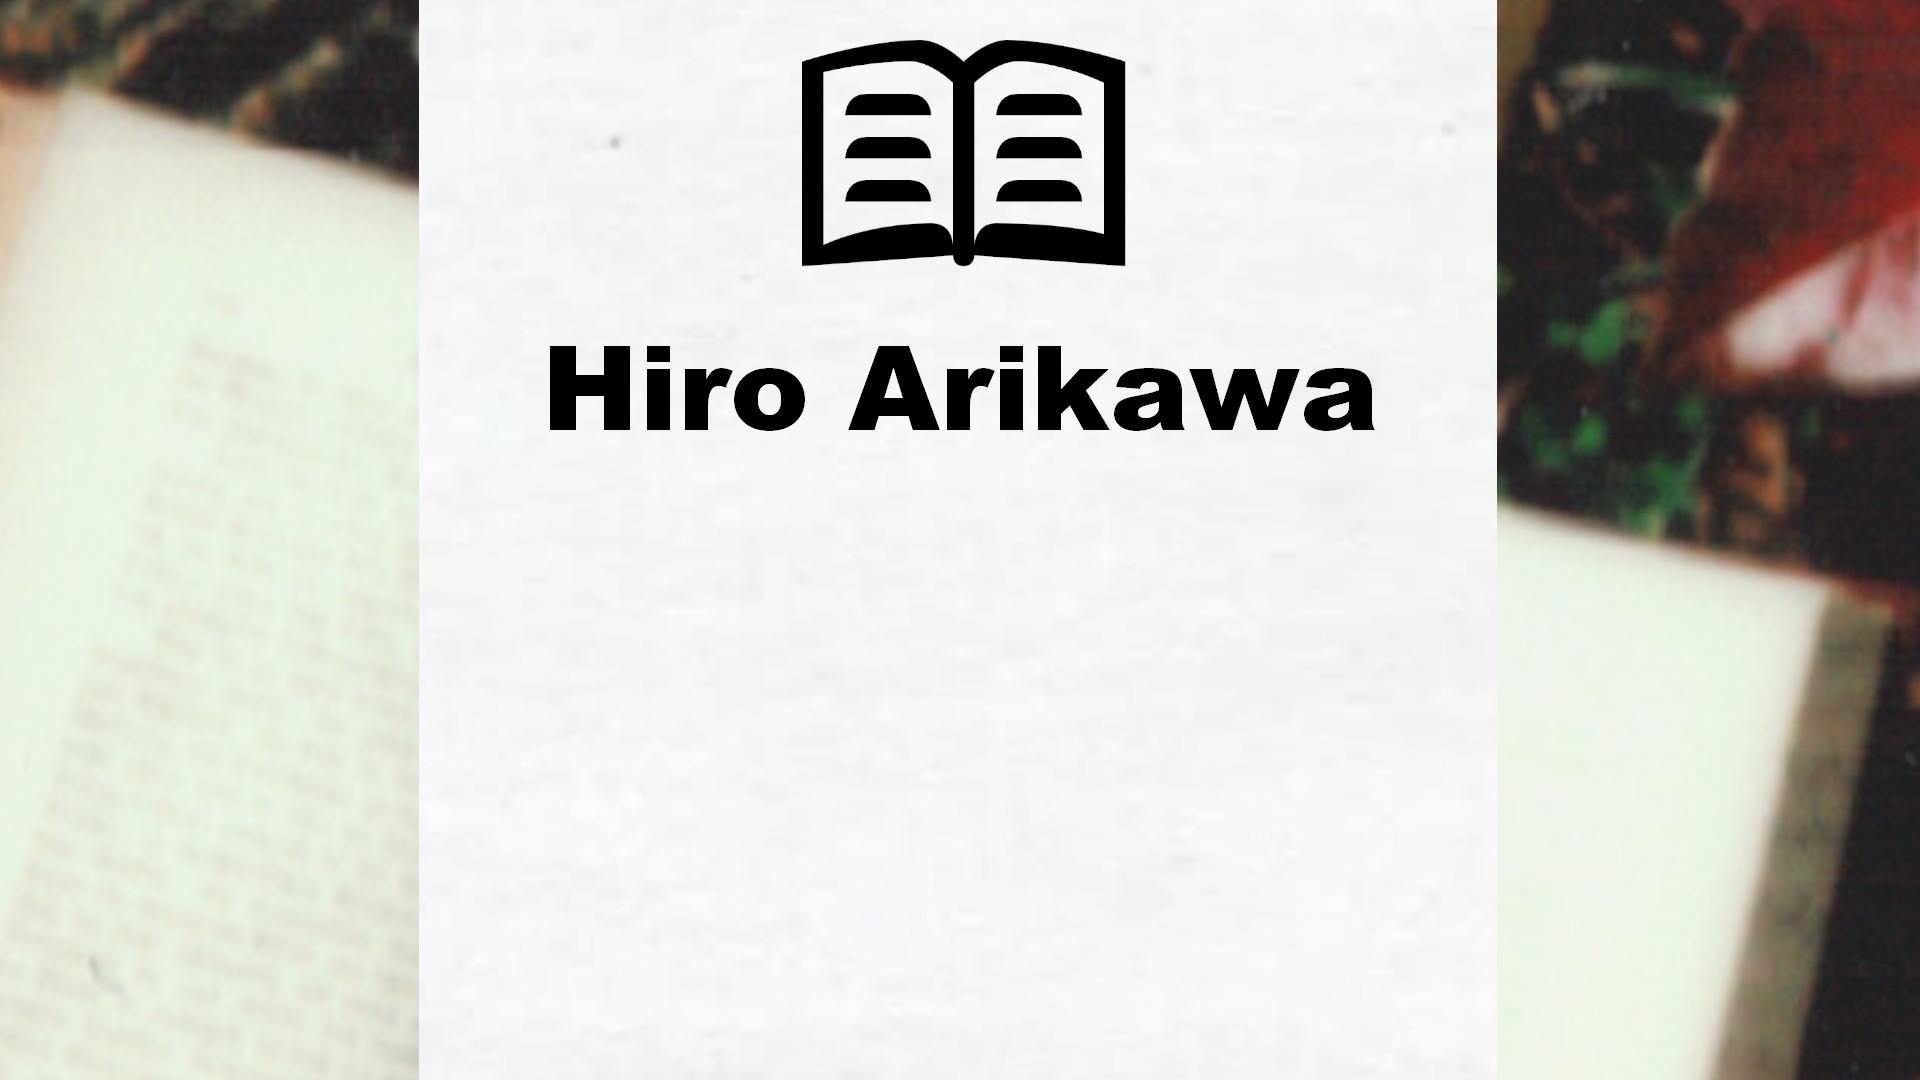 Hiro Arikawa - Livres, Biographie, Extraits et Photos